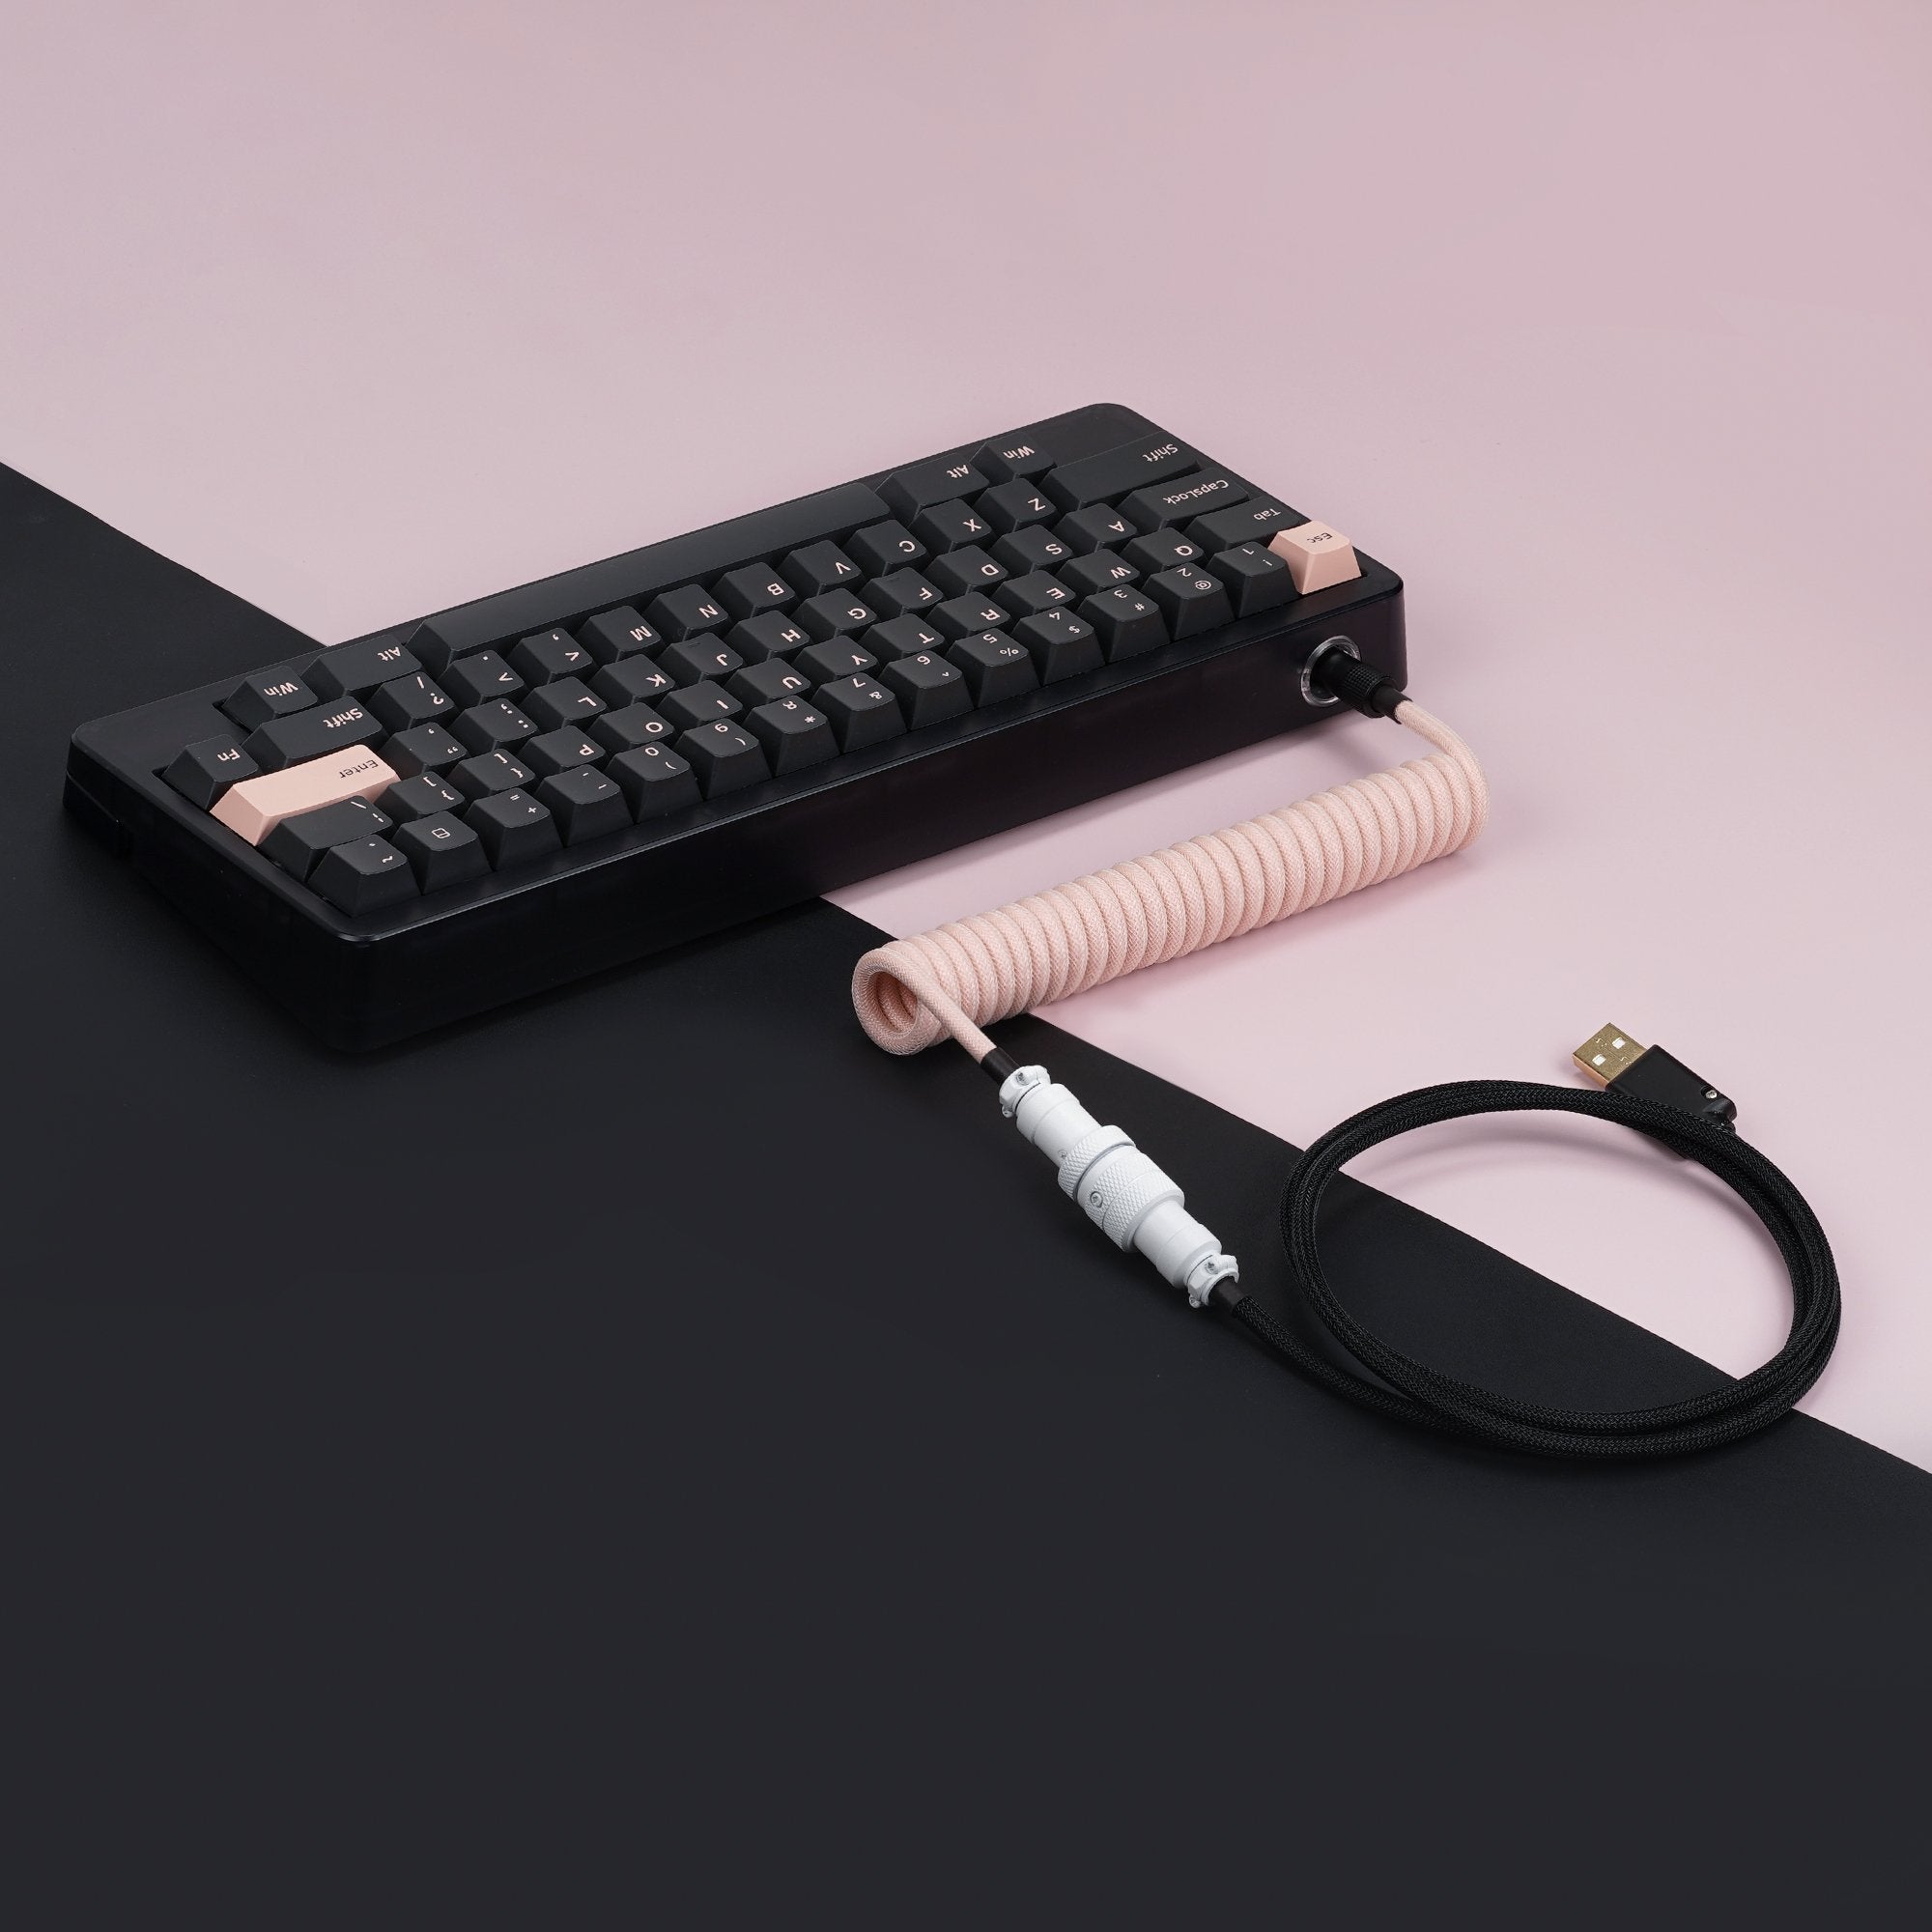 (KBDFANS) COIL CABLE PINK&BLACK HANDMADE CUSTOM MECHANICAL KEYBOARD USB-C